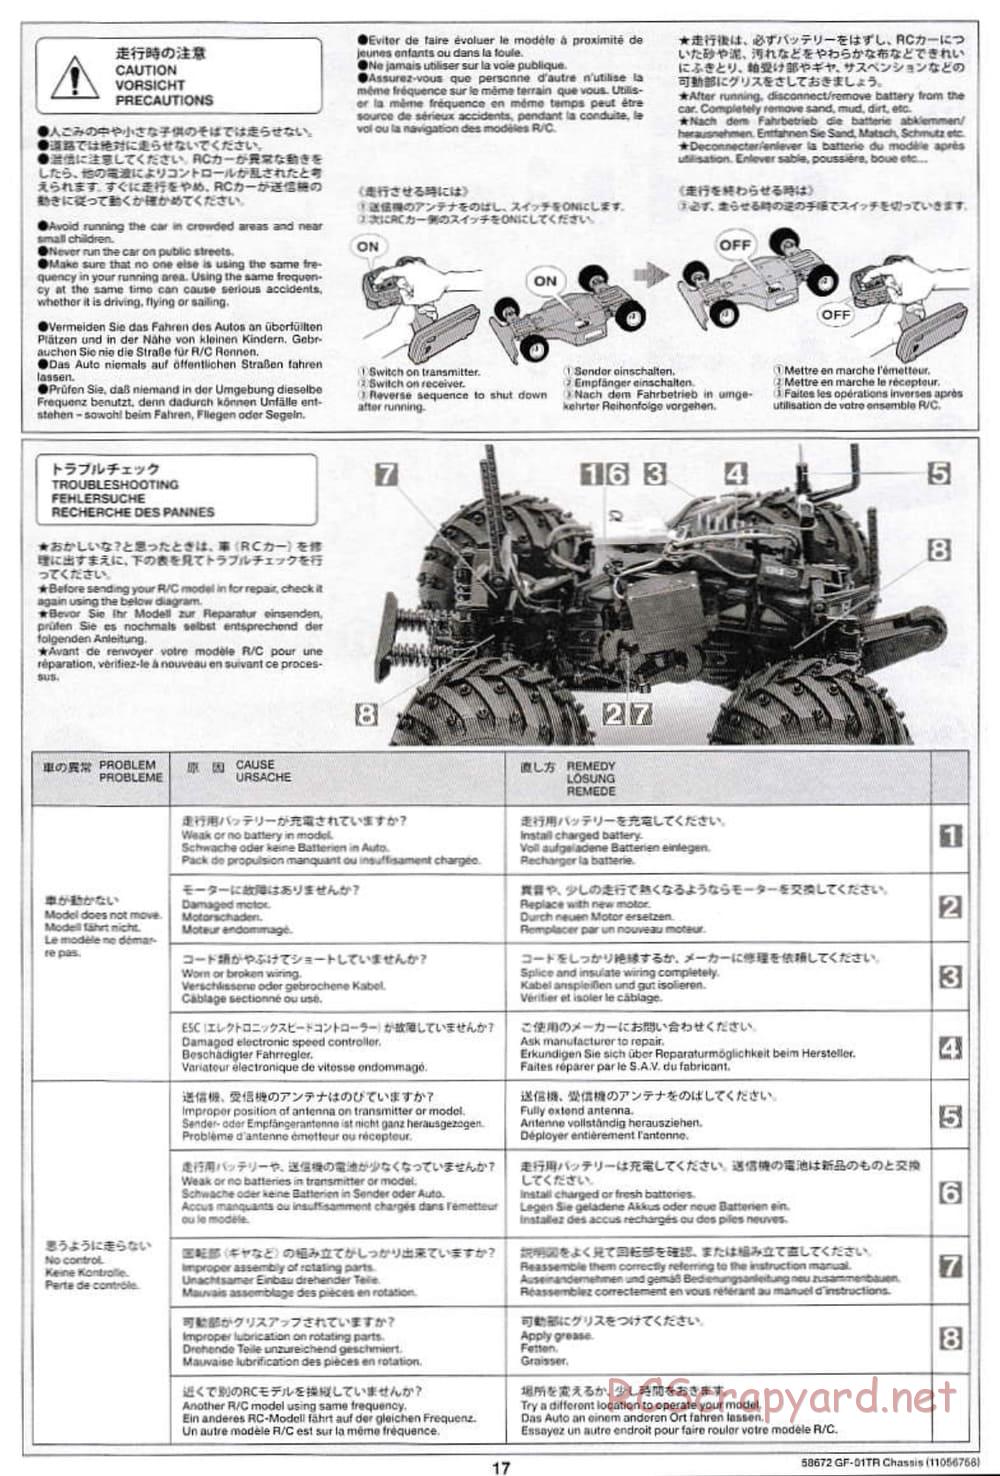 Tamiya - Monster Beetle Trail - GF-01TR Chassis - Manual - Page 17